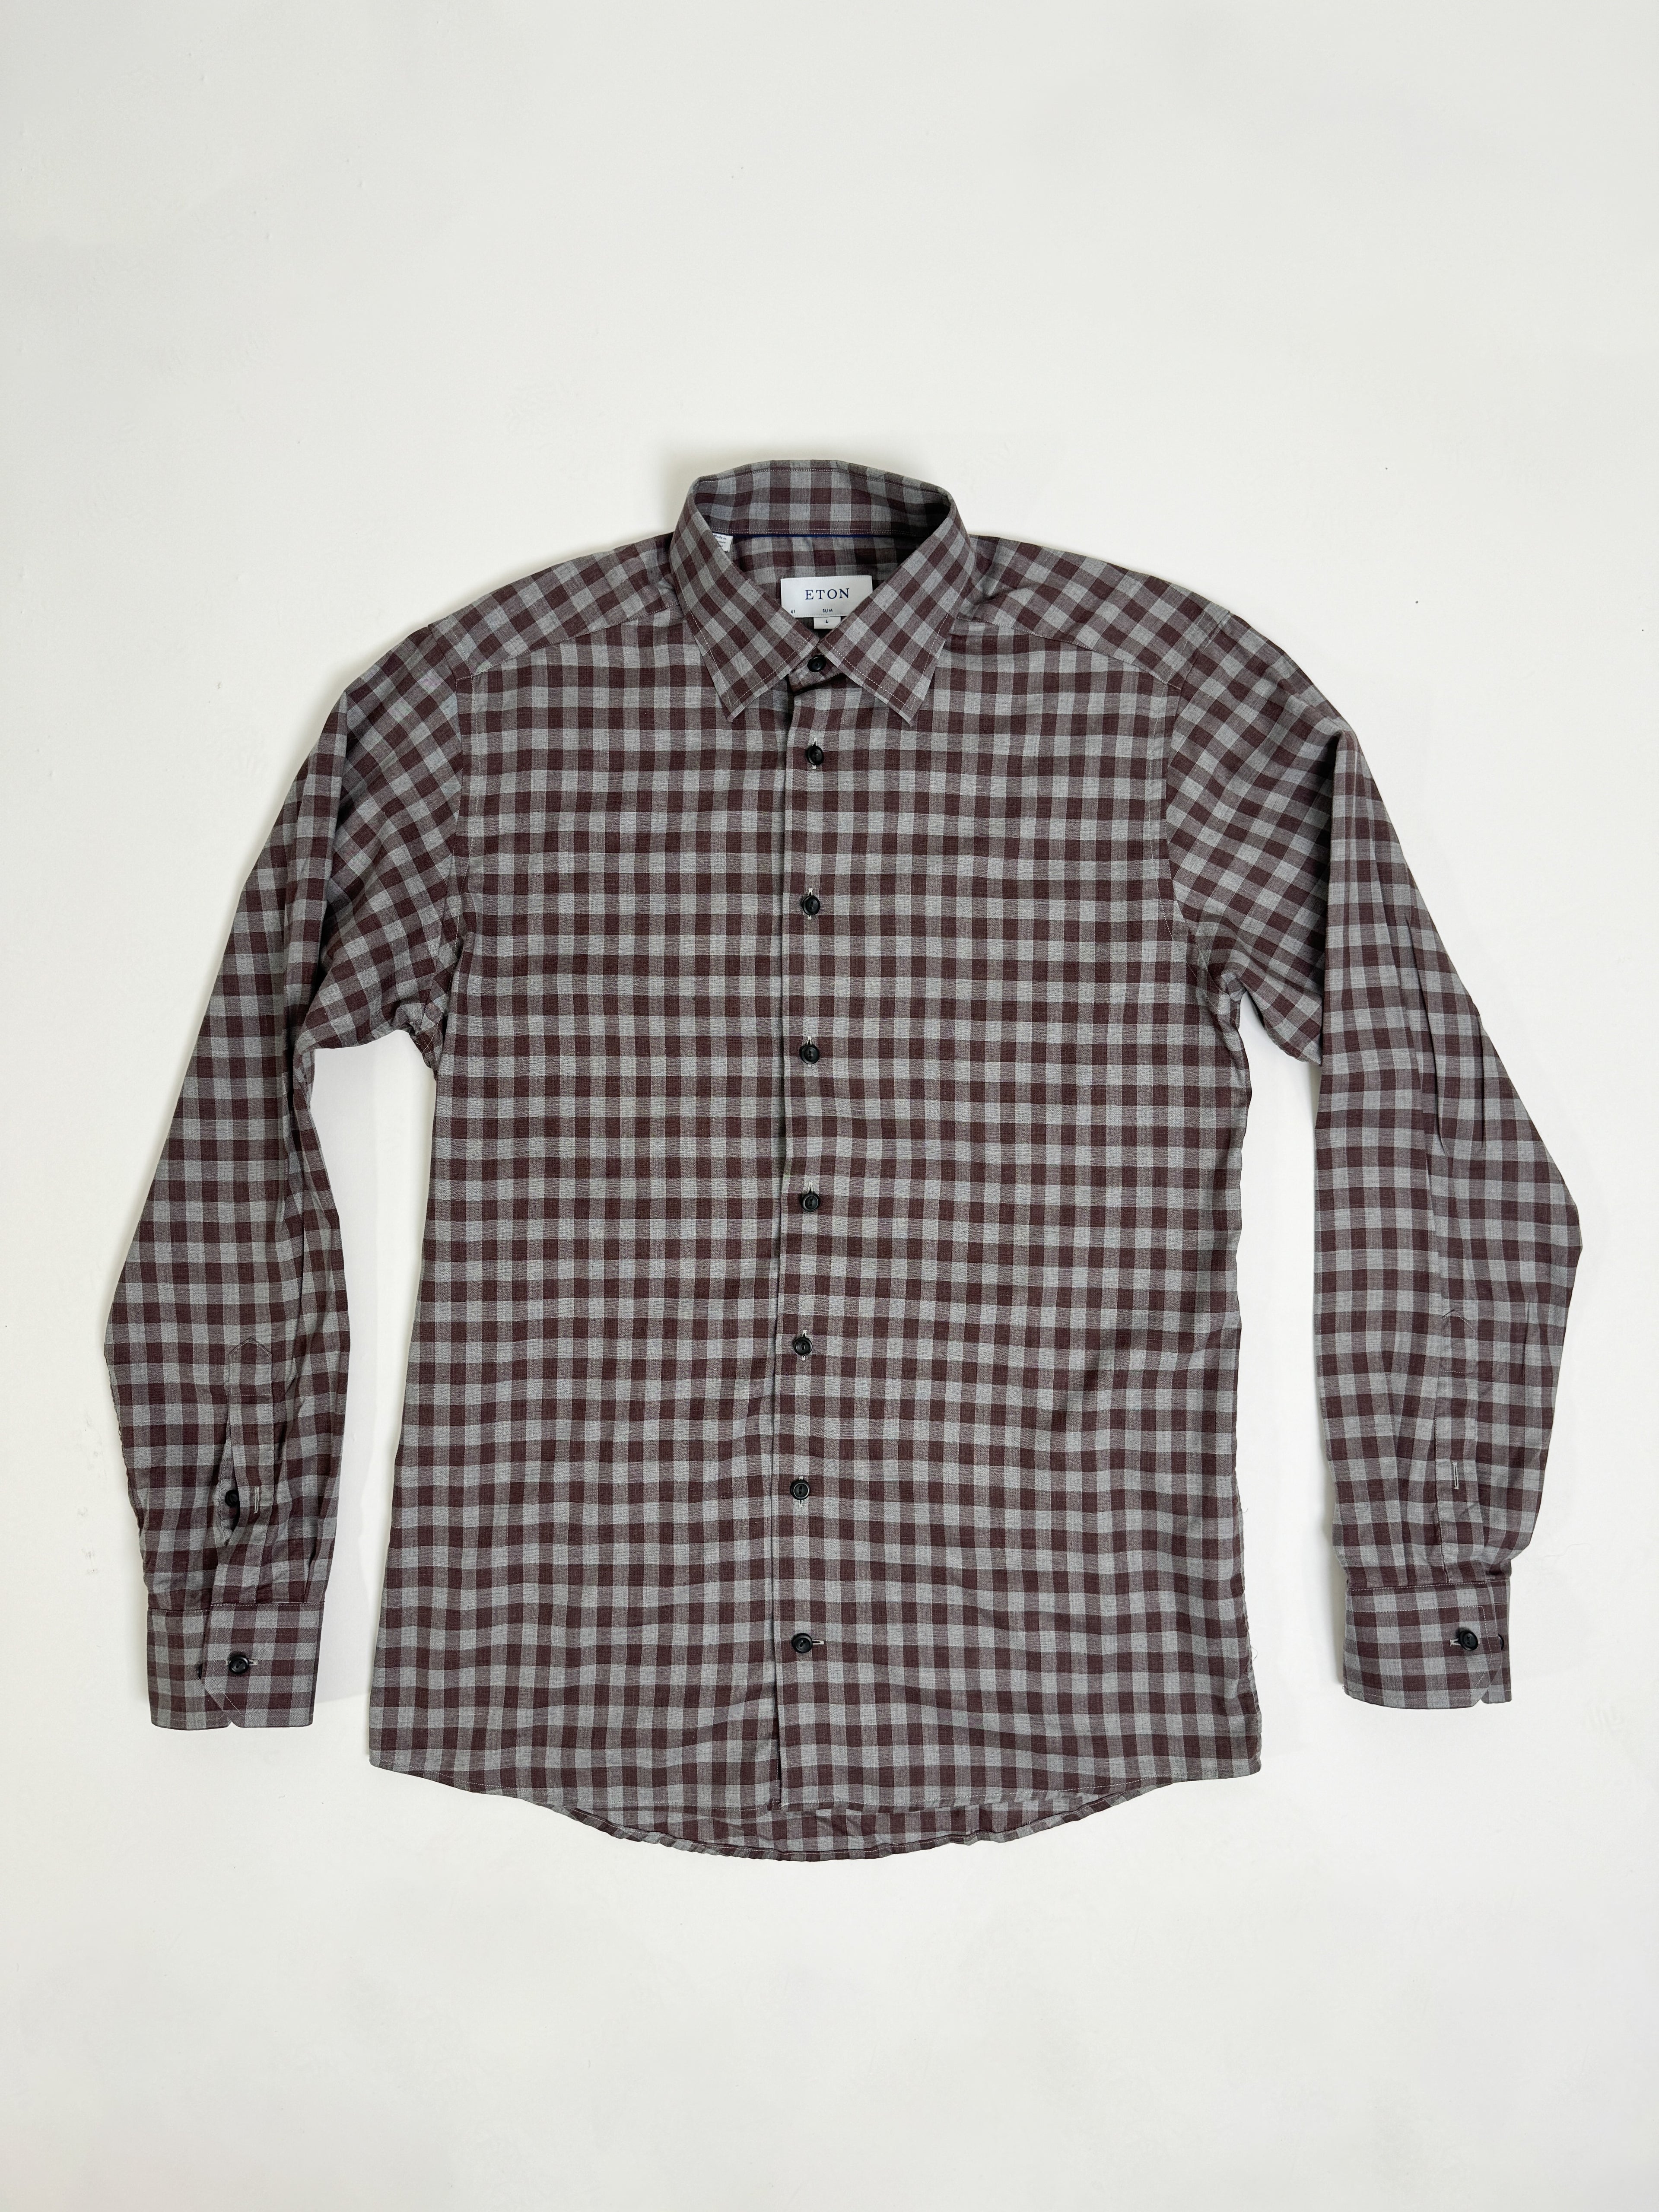 Eton Grey and Light Purple Checkered Slim fit Shirt